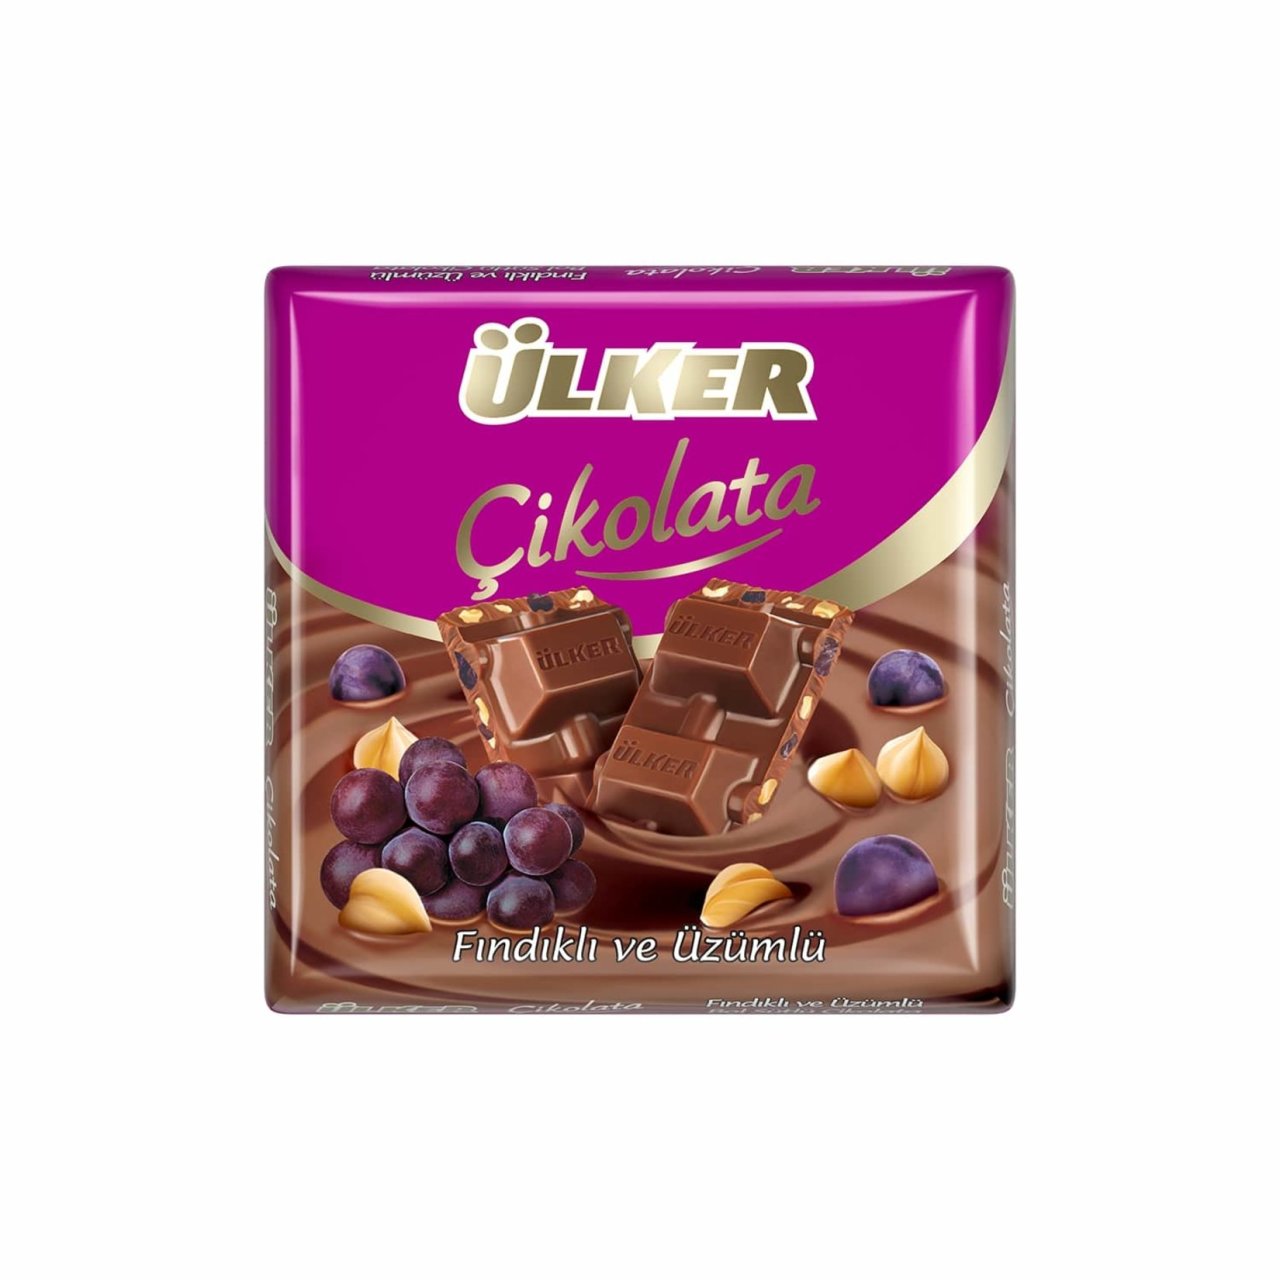 ÜLKERÜlker Kare Fındıklı Üzümlü Bol Sütlü Çikolata 65g 6 Adet27,50 TL